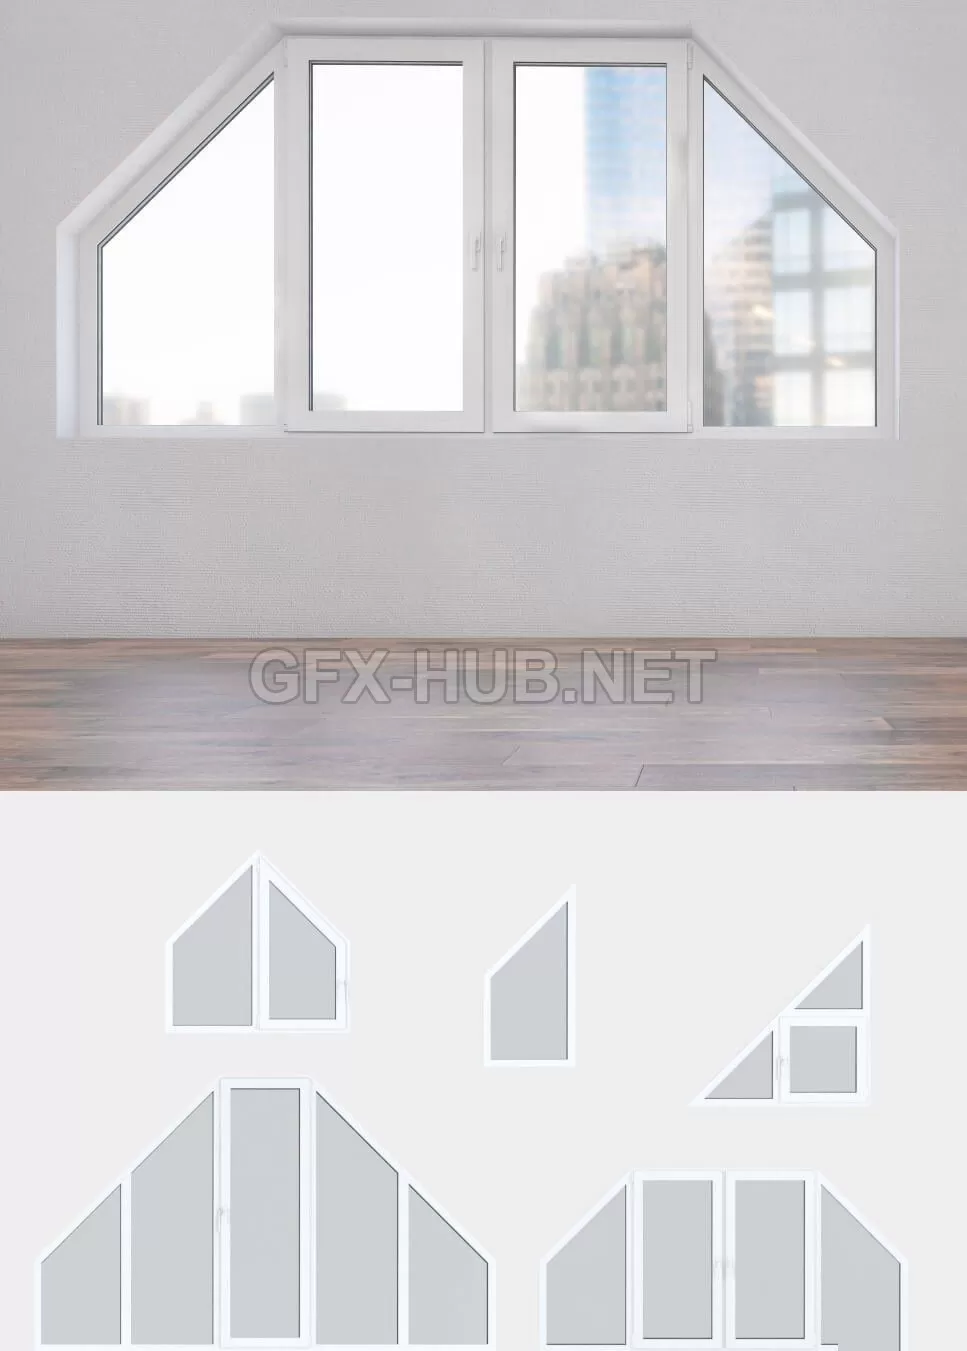 WINDOWS – A set of plastic windows 13